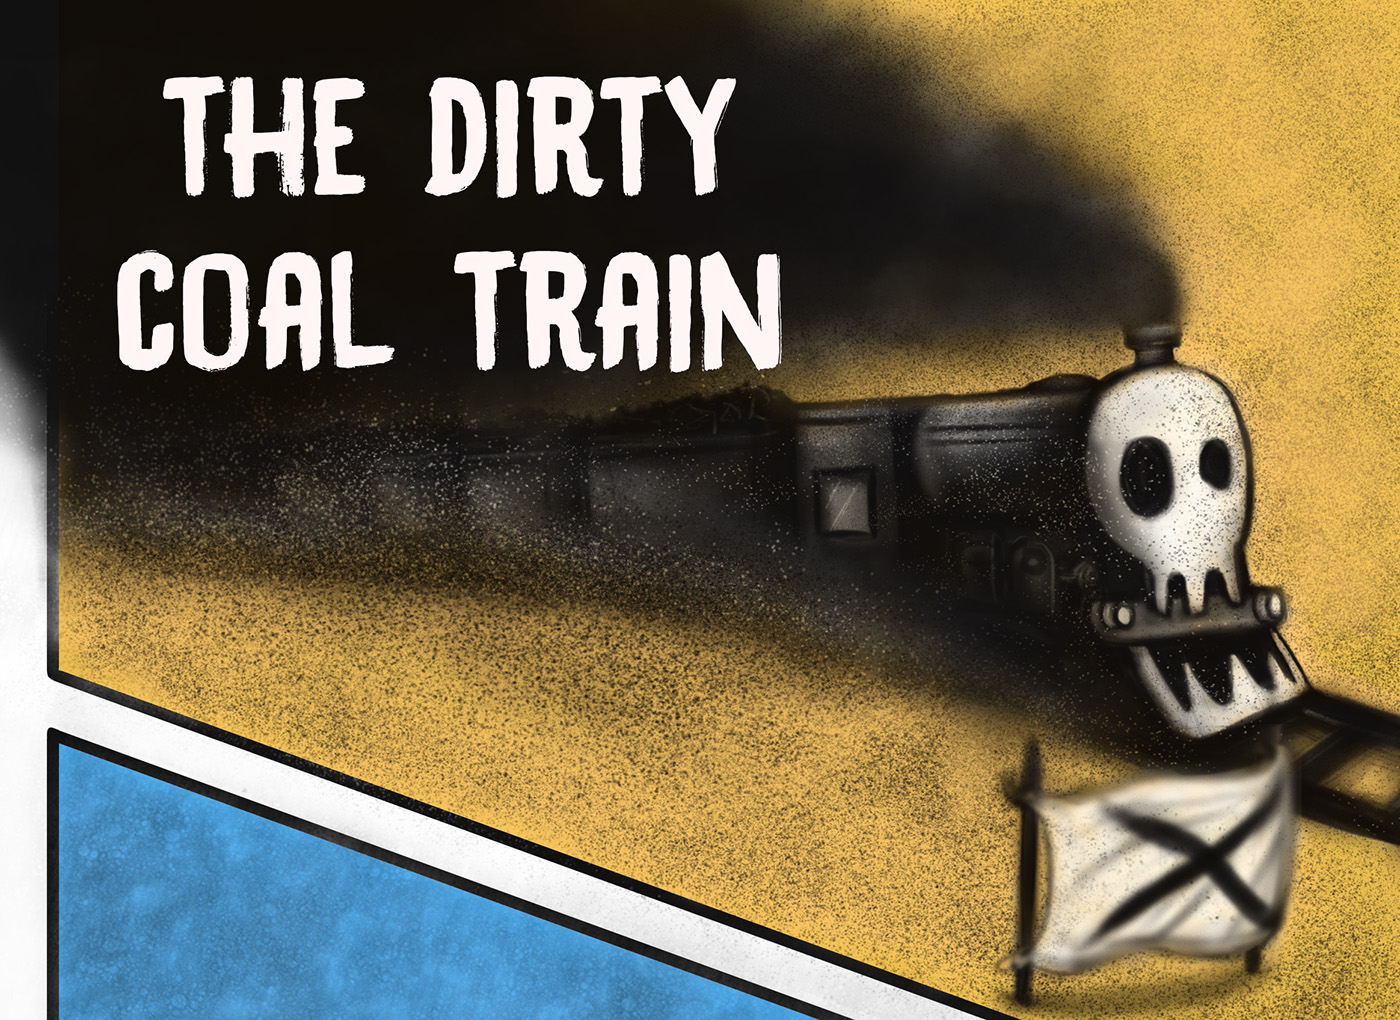 smartini Martin poster gig music rock dirty coal train wacom